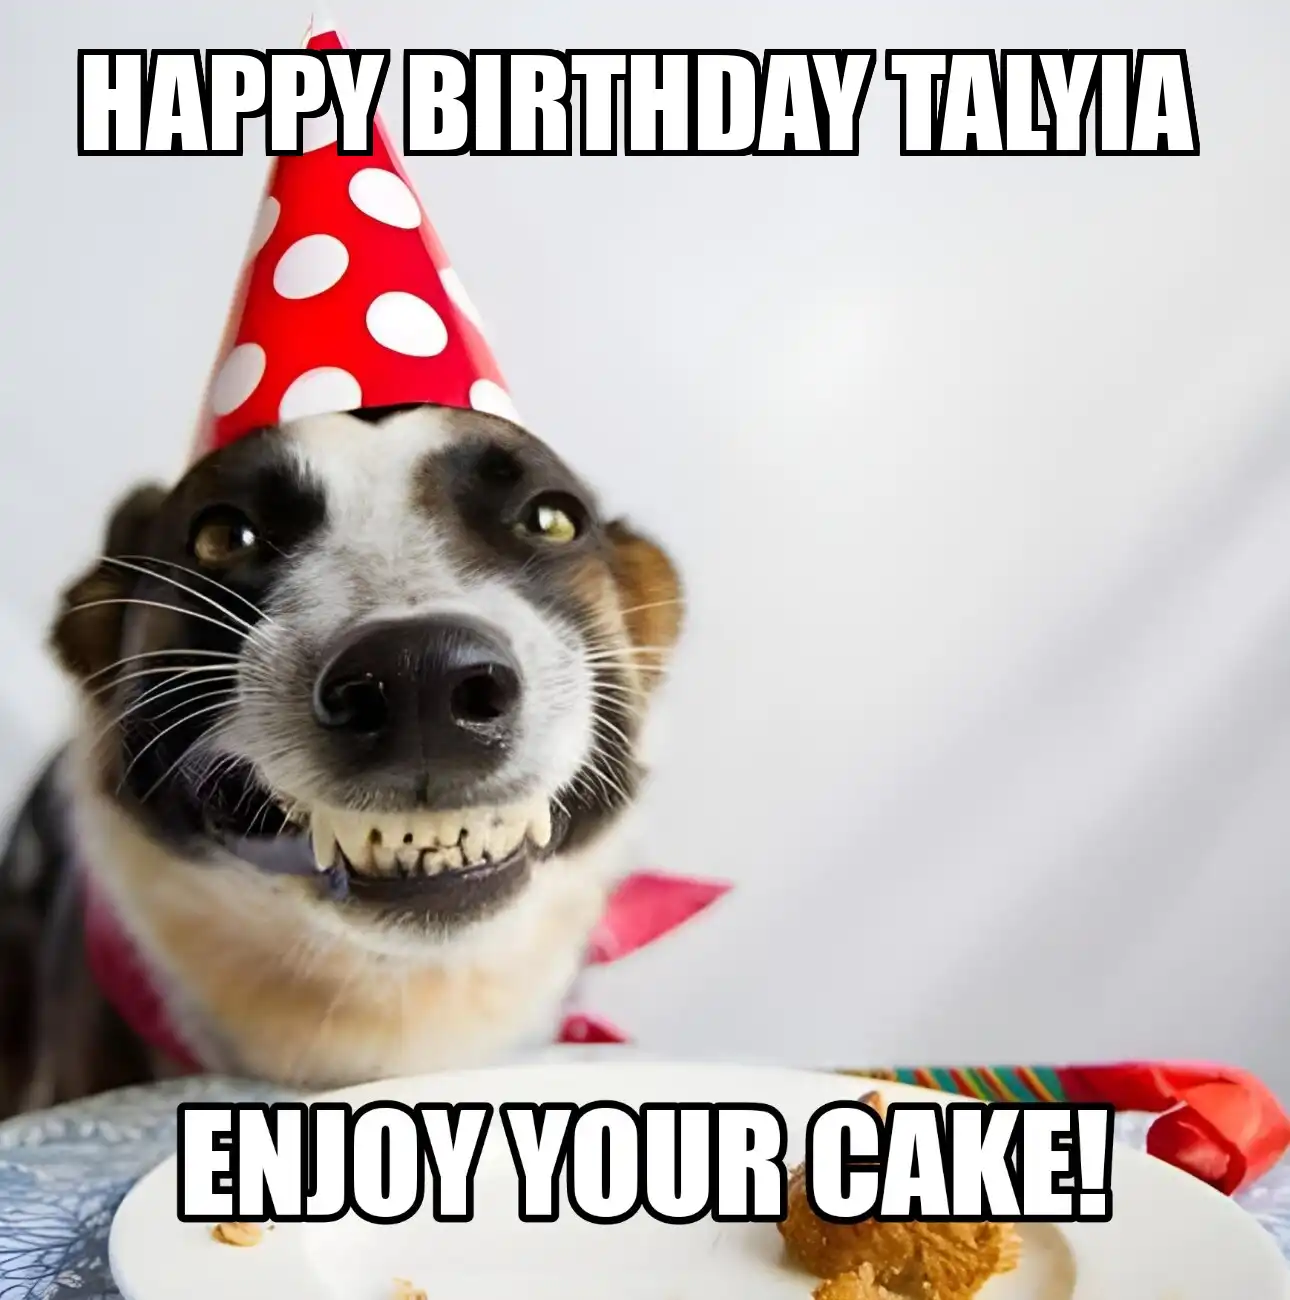 Happy Birthday Talyia Enjoy Your Cake Dog Meme